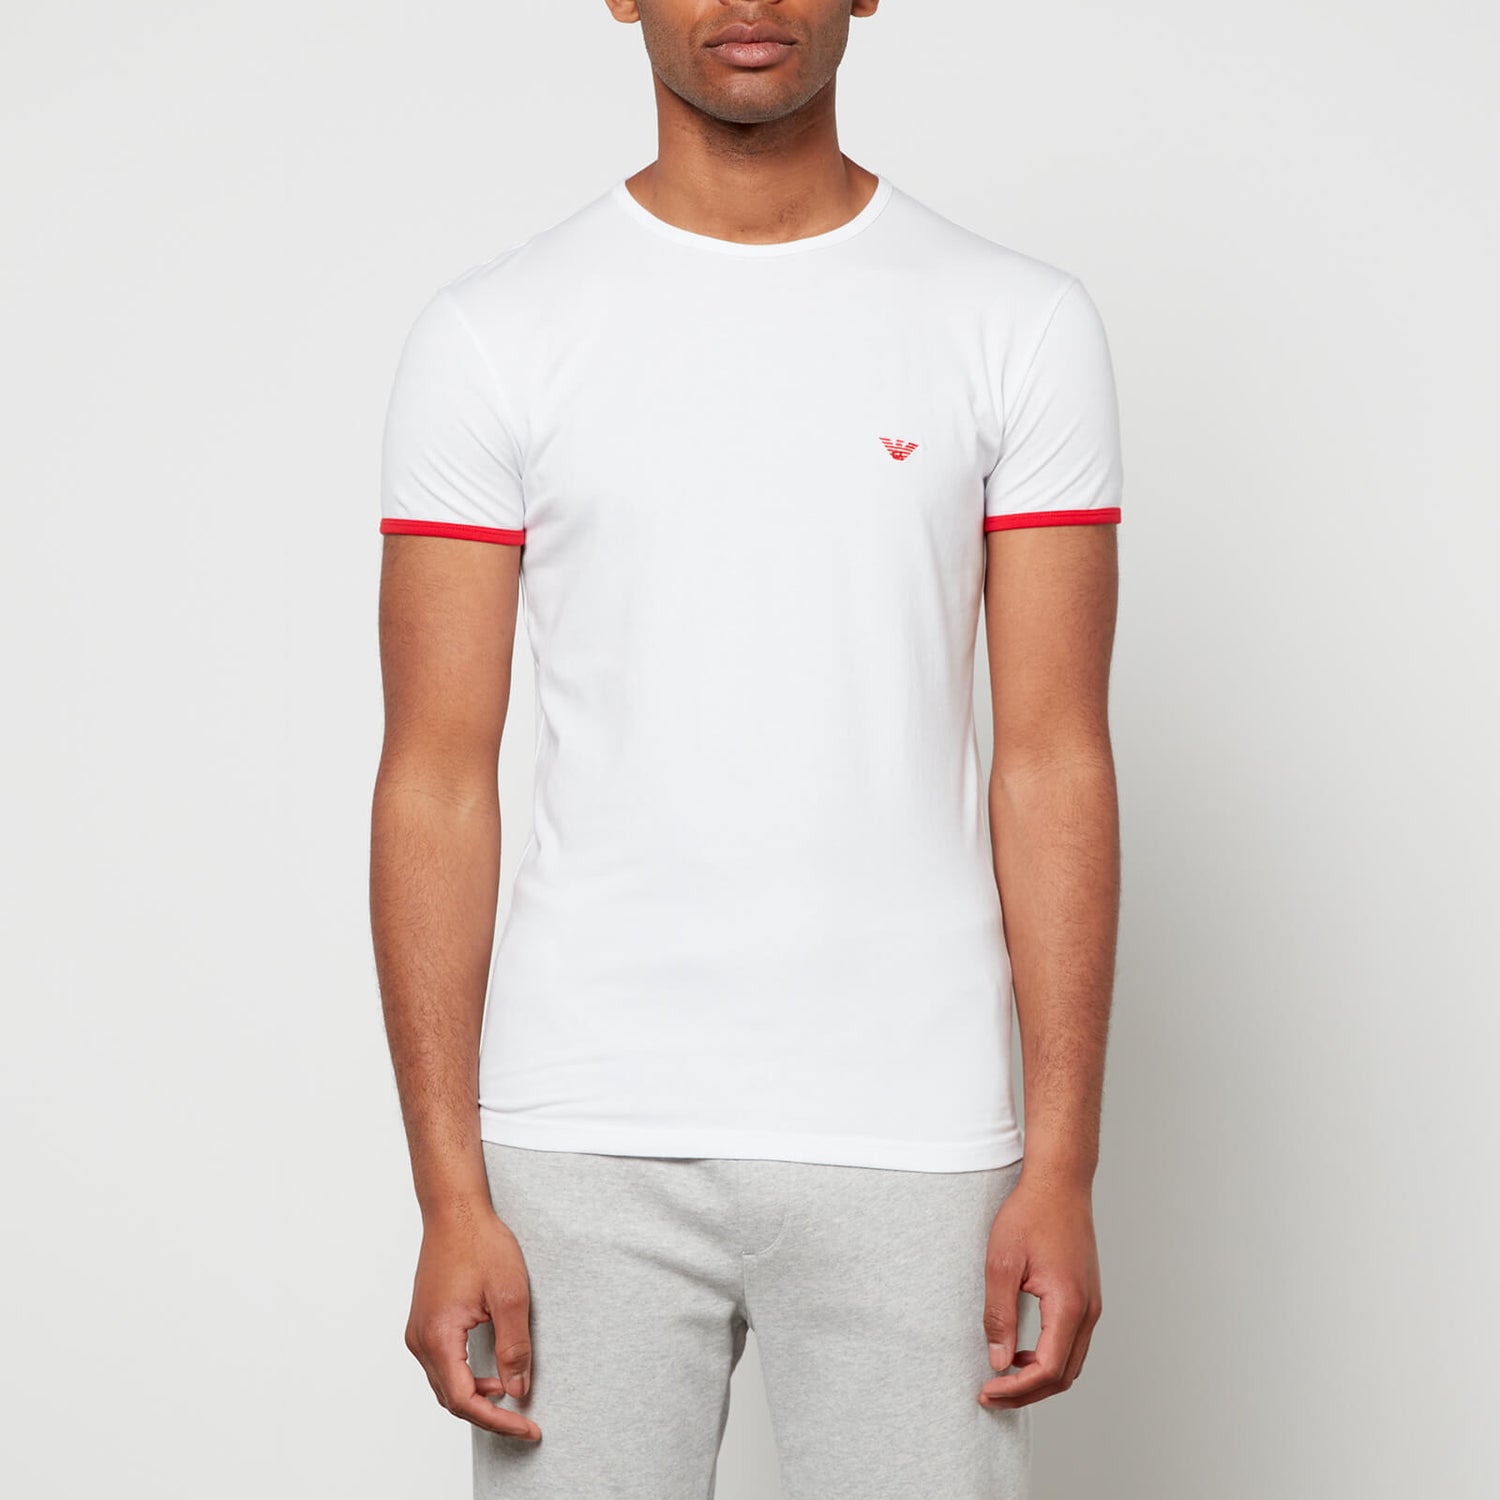 Emporio Armani Men's Contrast Binding T-Shirt - White - S